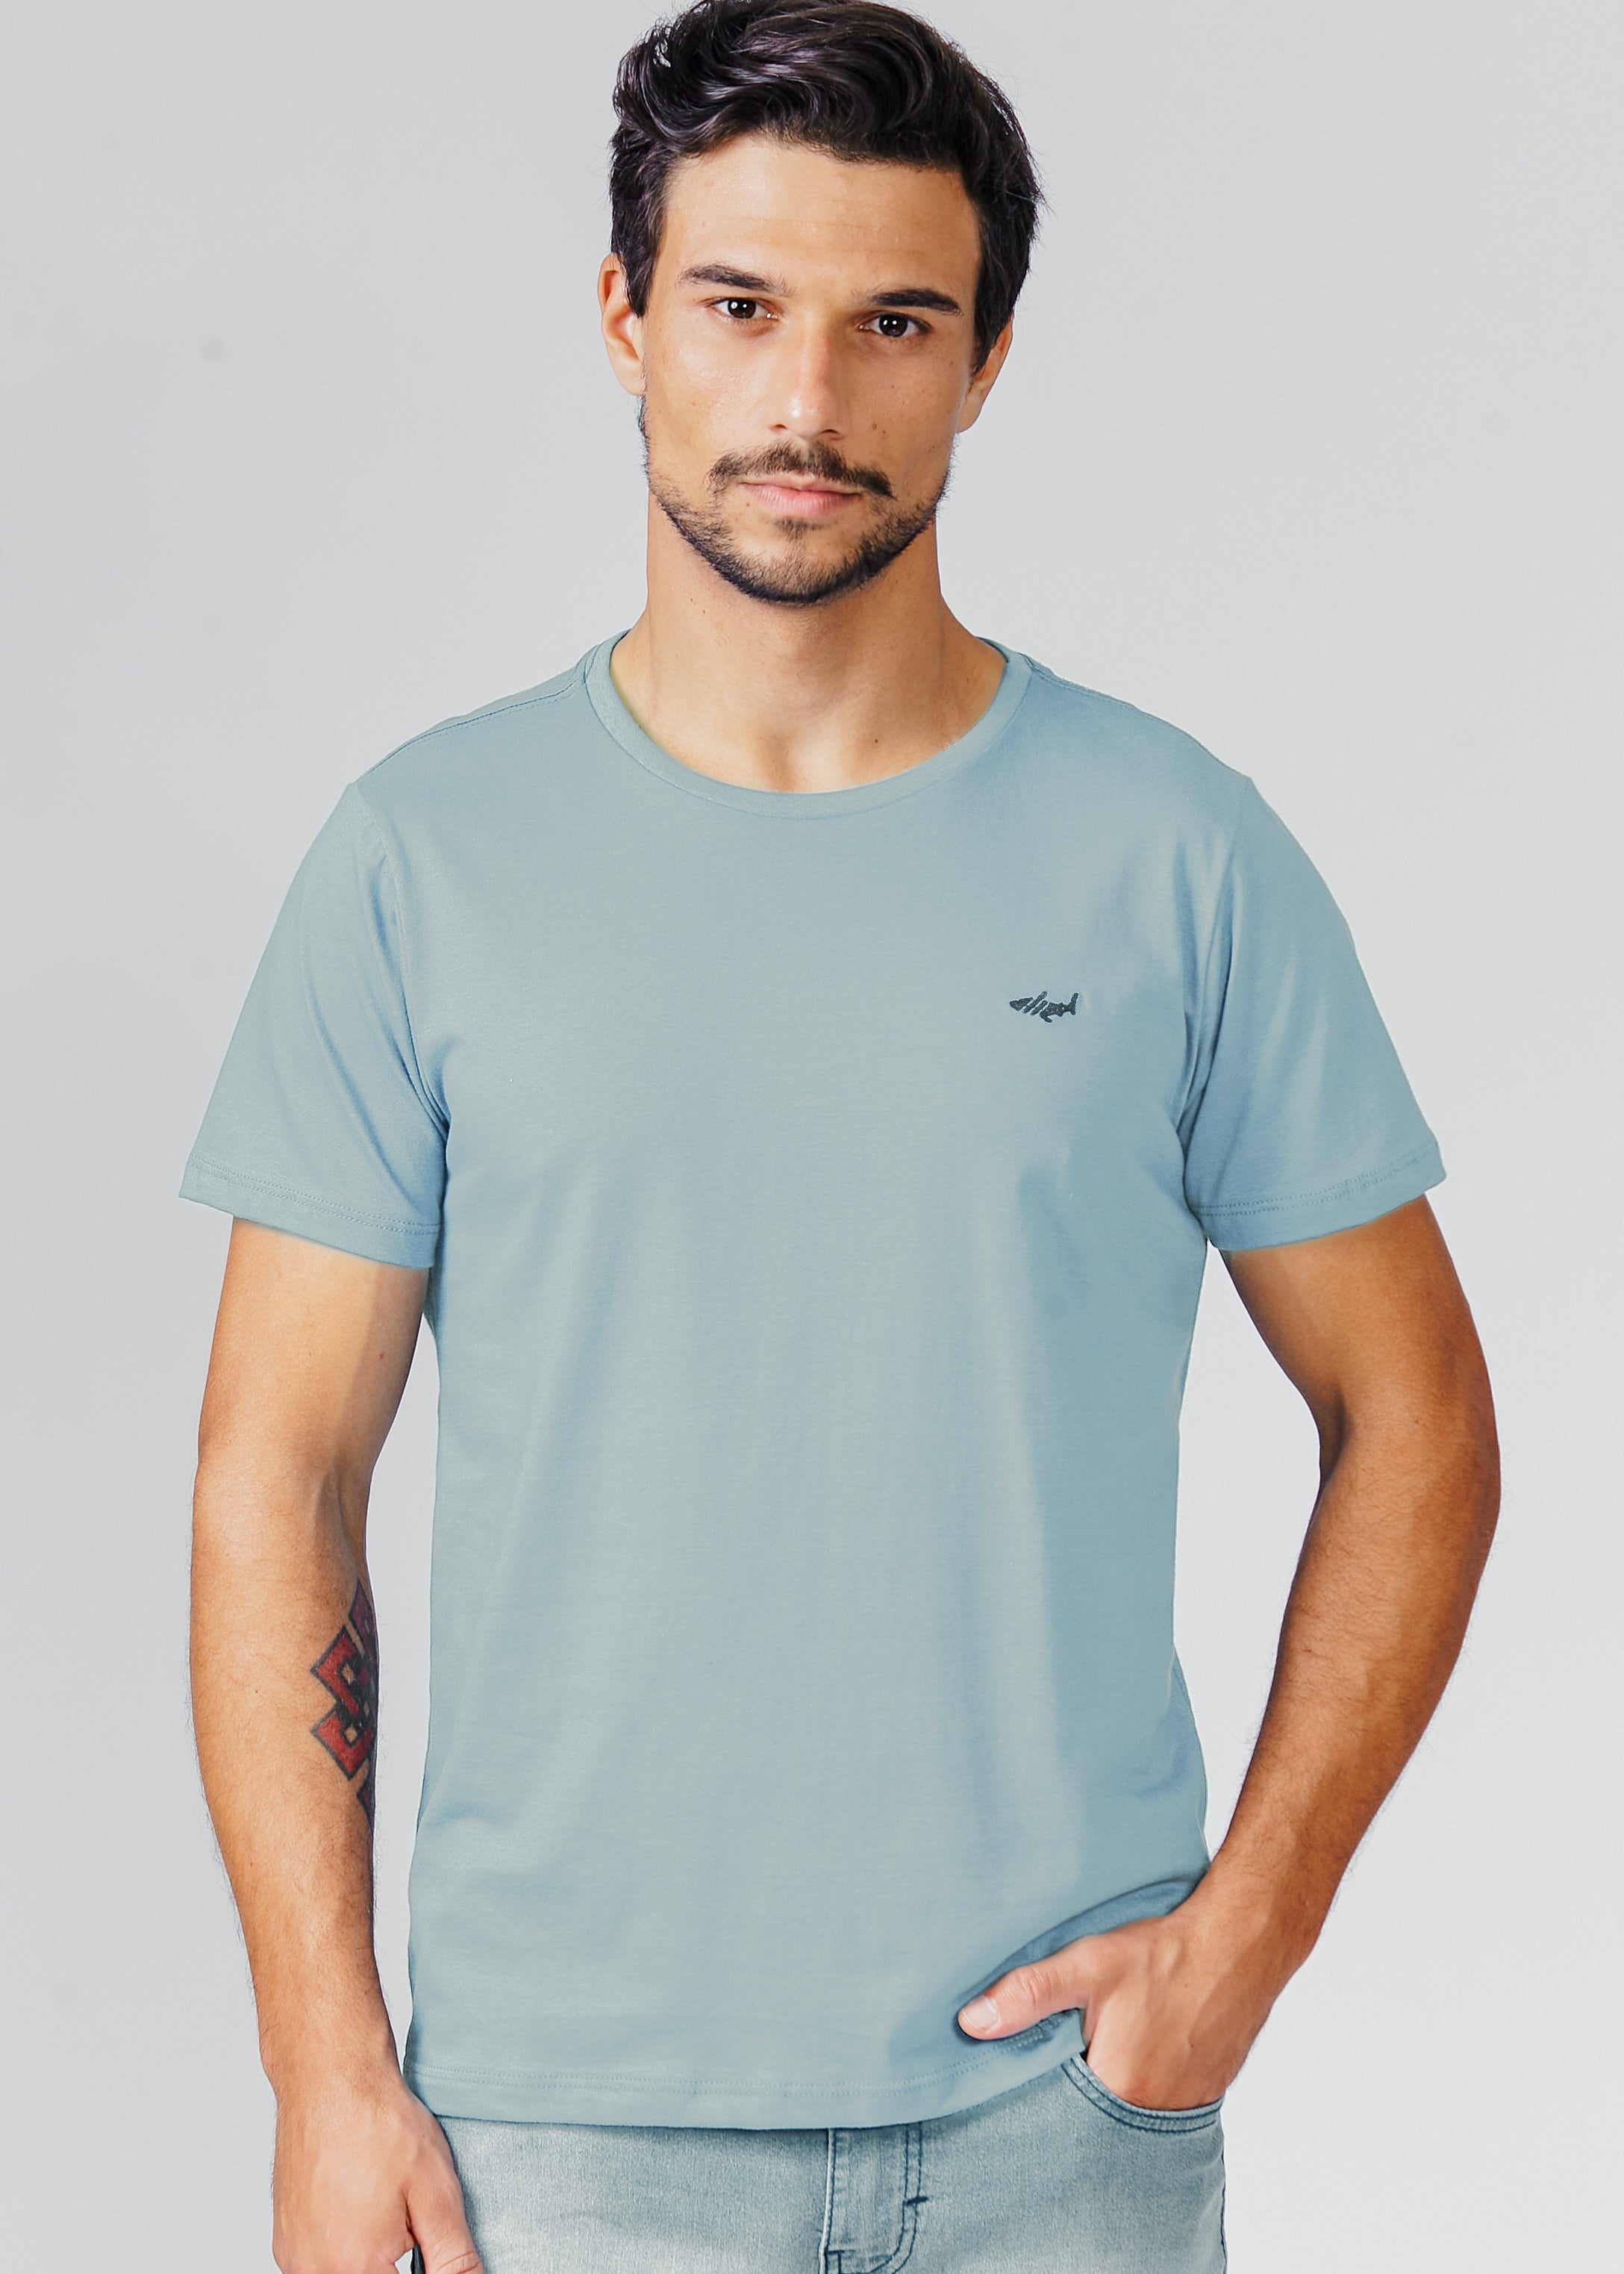 Camiseta Básica - Cinza